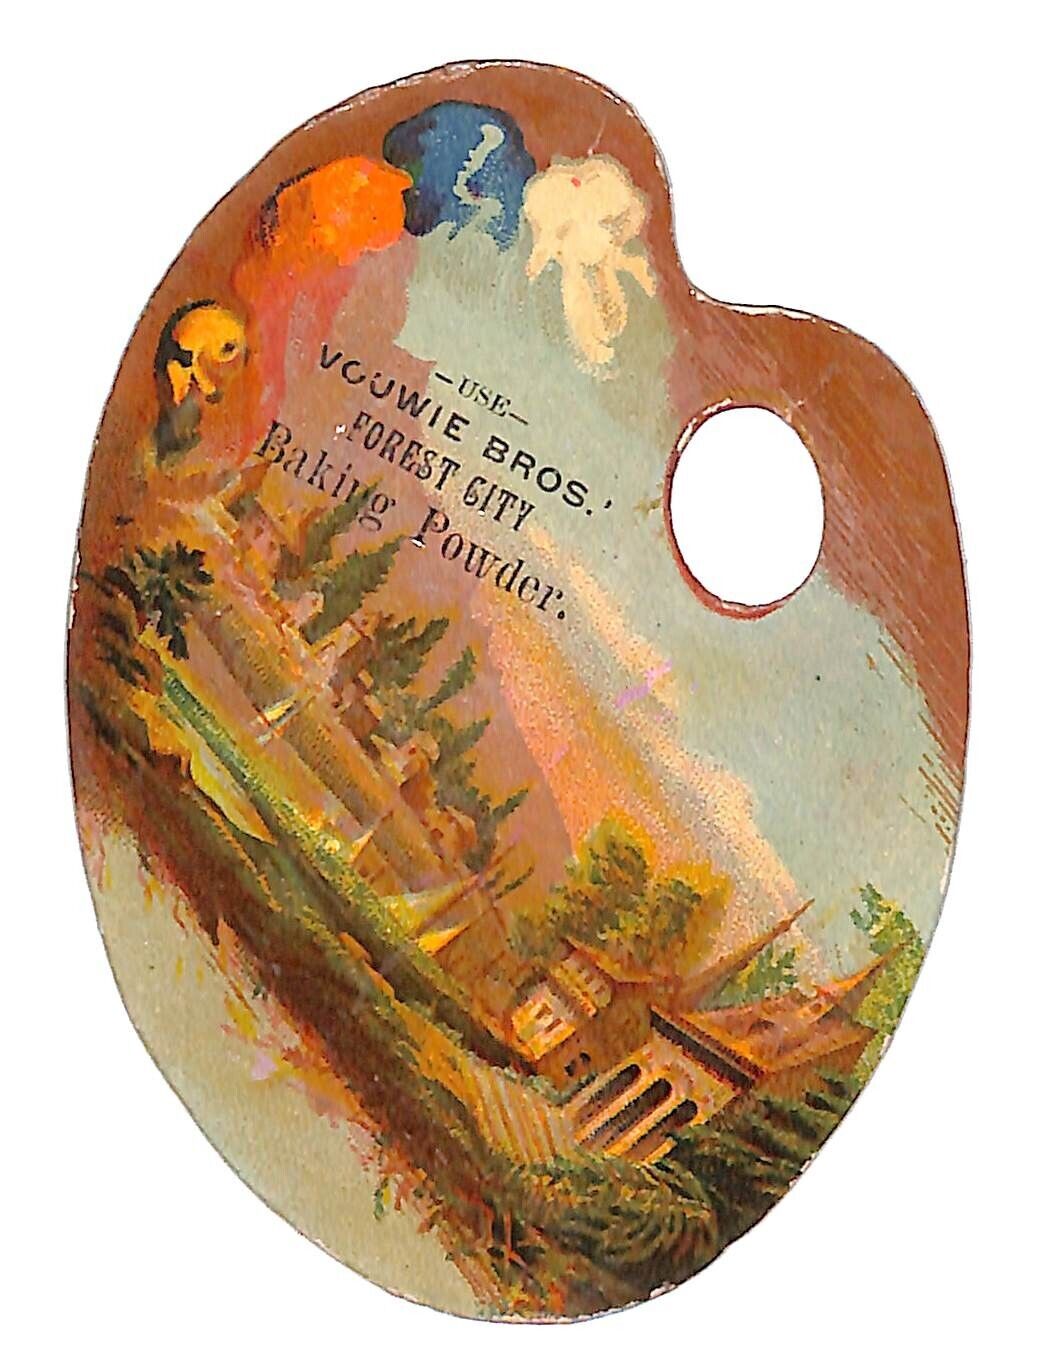 Artist Palette Shaped Victorian Trade Card Vouwie Bros Baking Powder Forest City